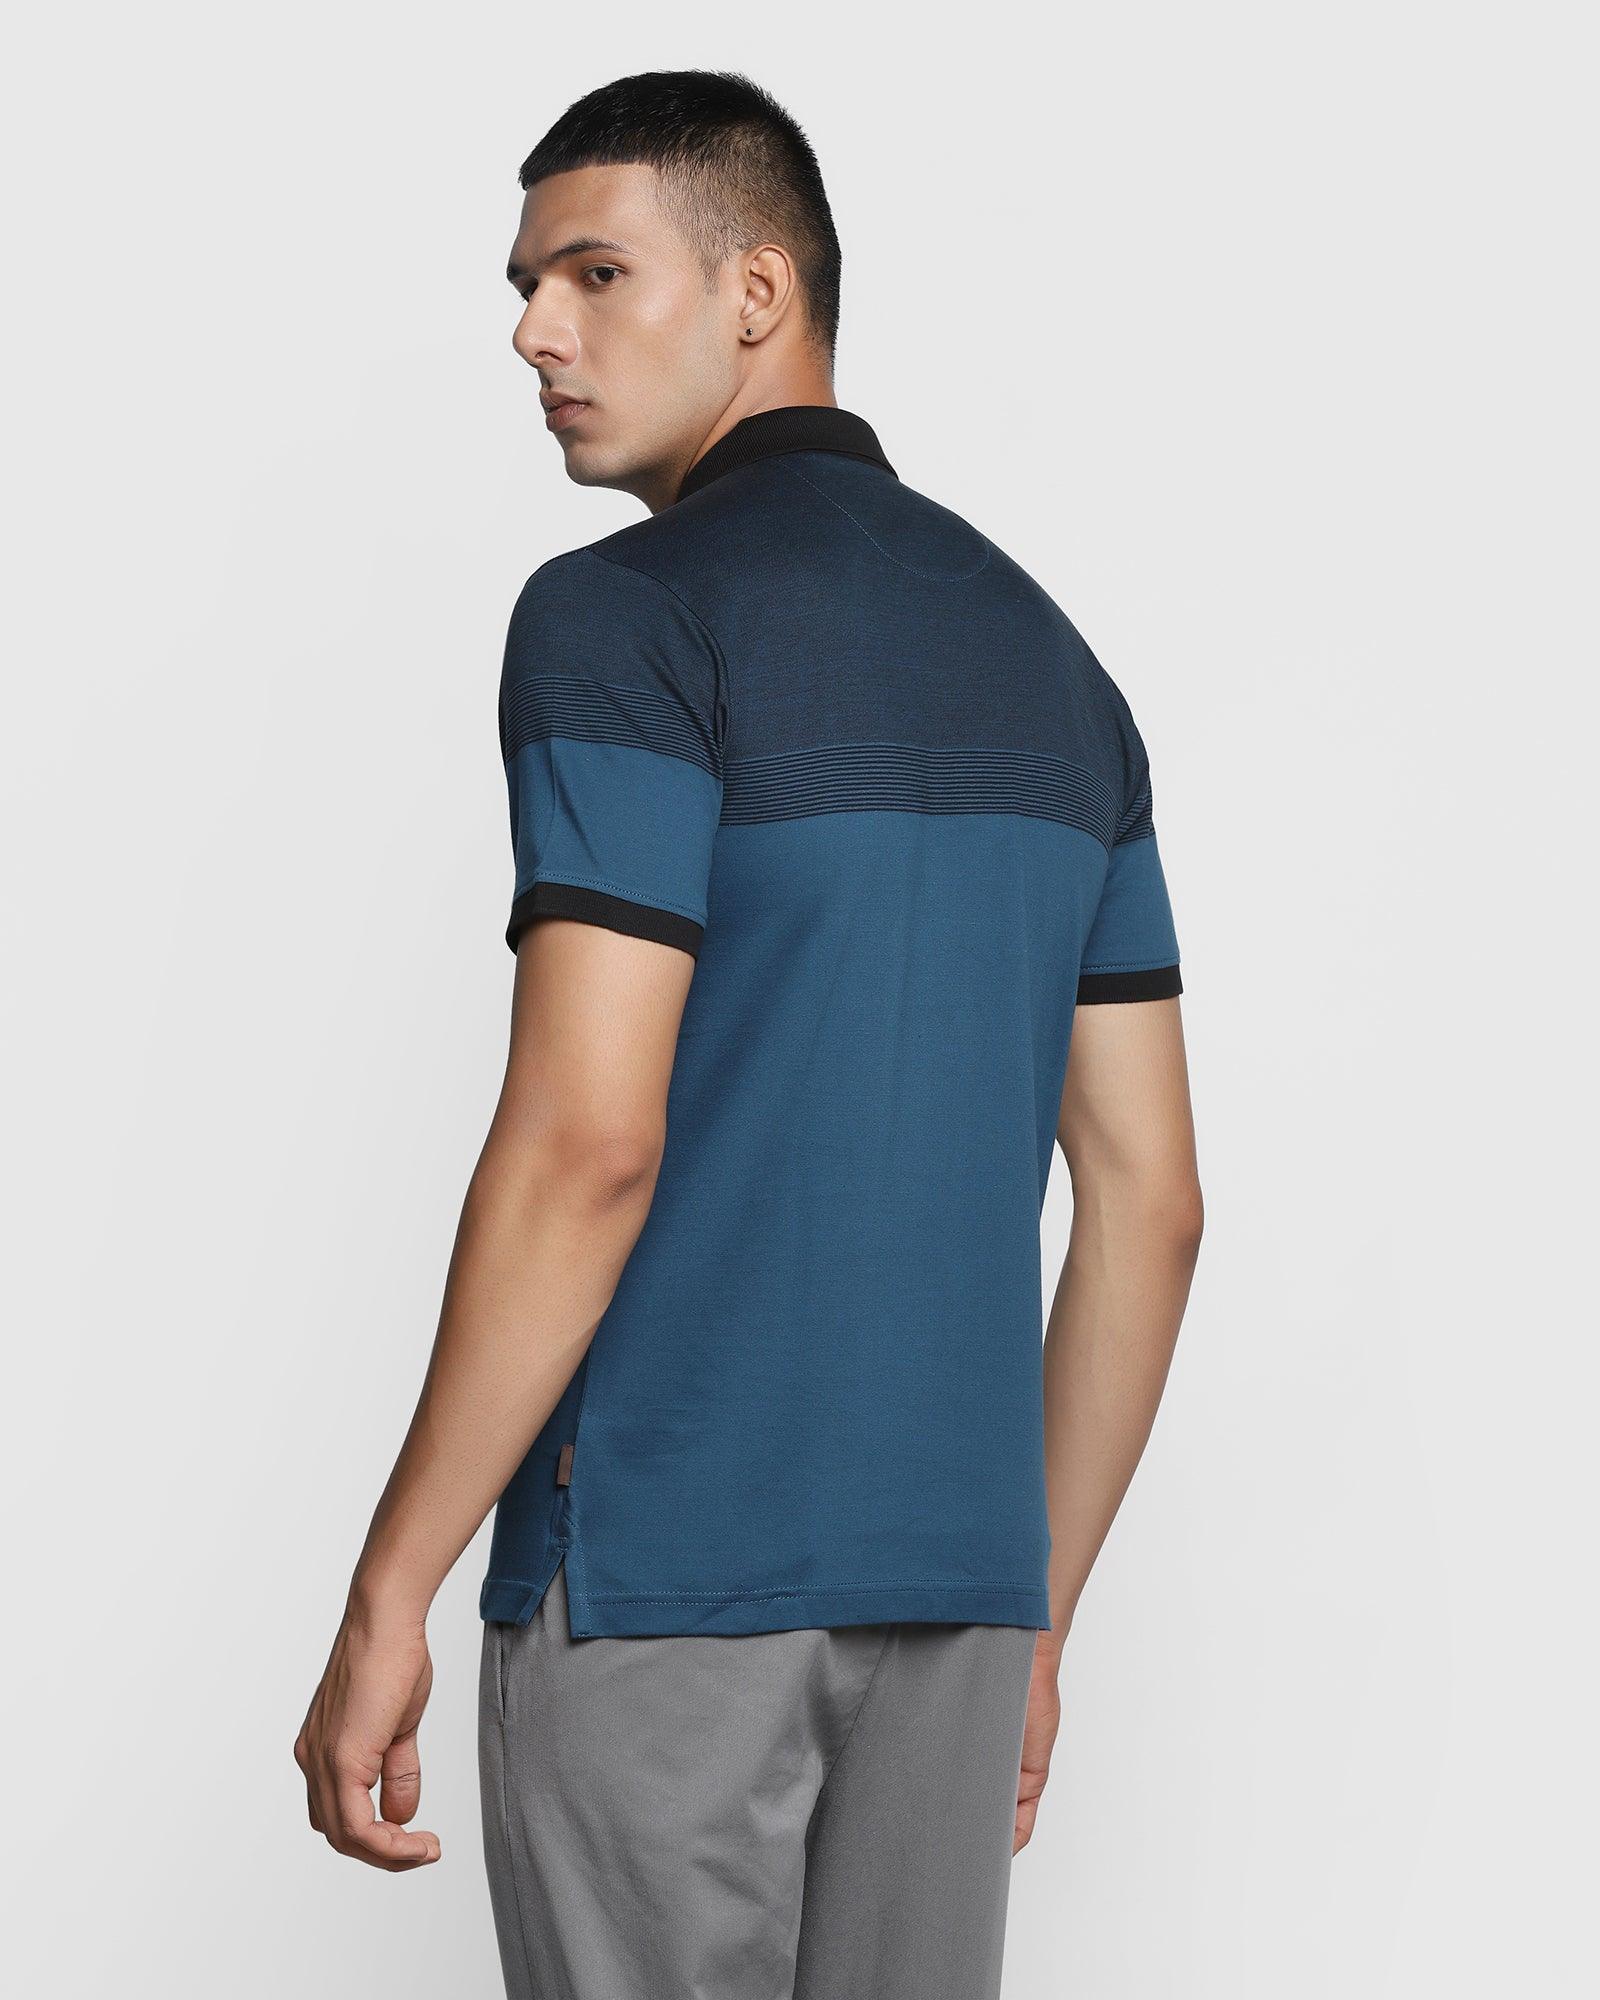 Polo Teal Blue Striped T Shirt - Lake